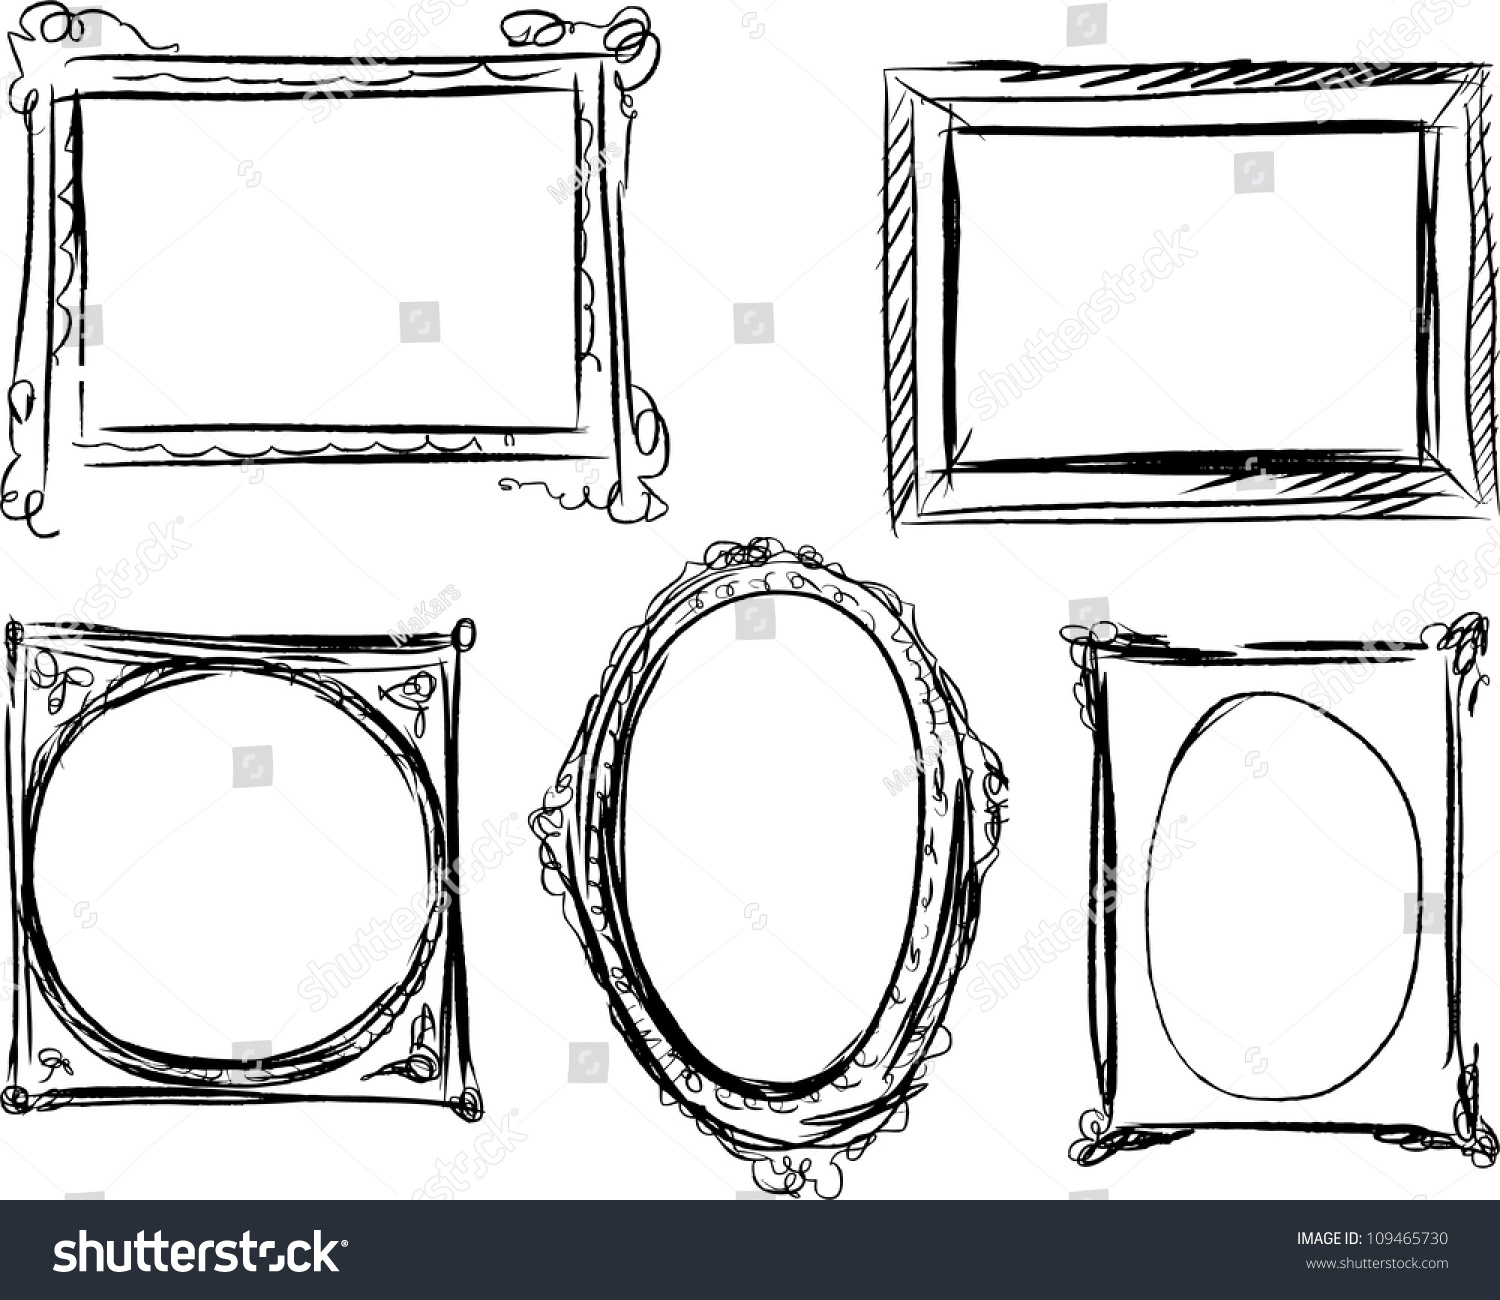 Hand Drawn Frames Stock Vector 109465730 - Shutterstock